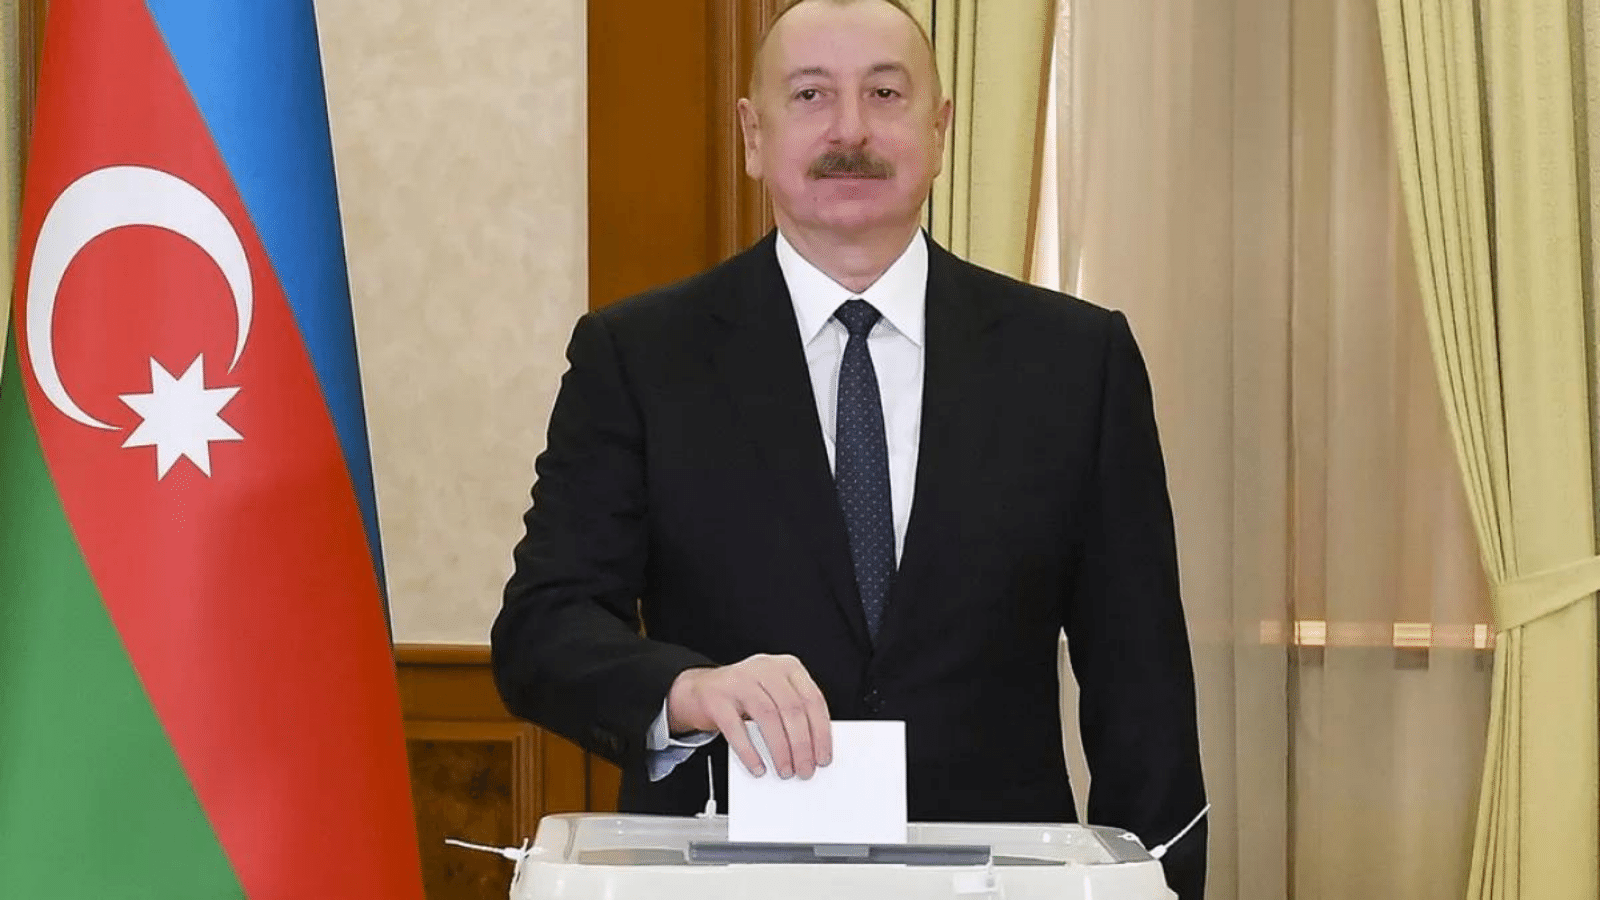 İlham Aliyev Meclis’i feshetti, Azerbaycan 1 Eylül’de seçime gidiyor